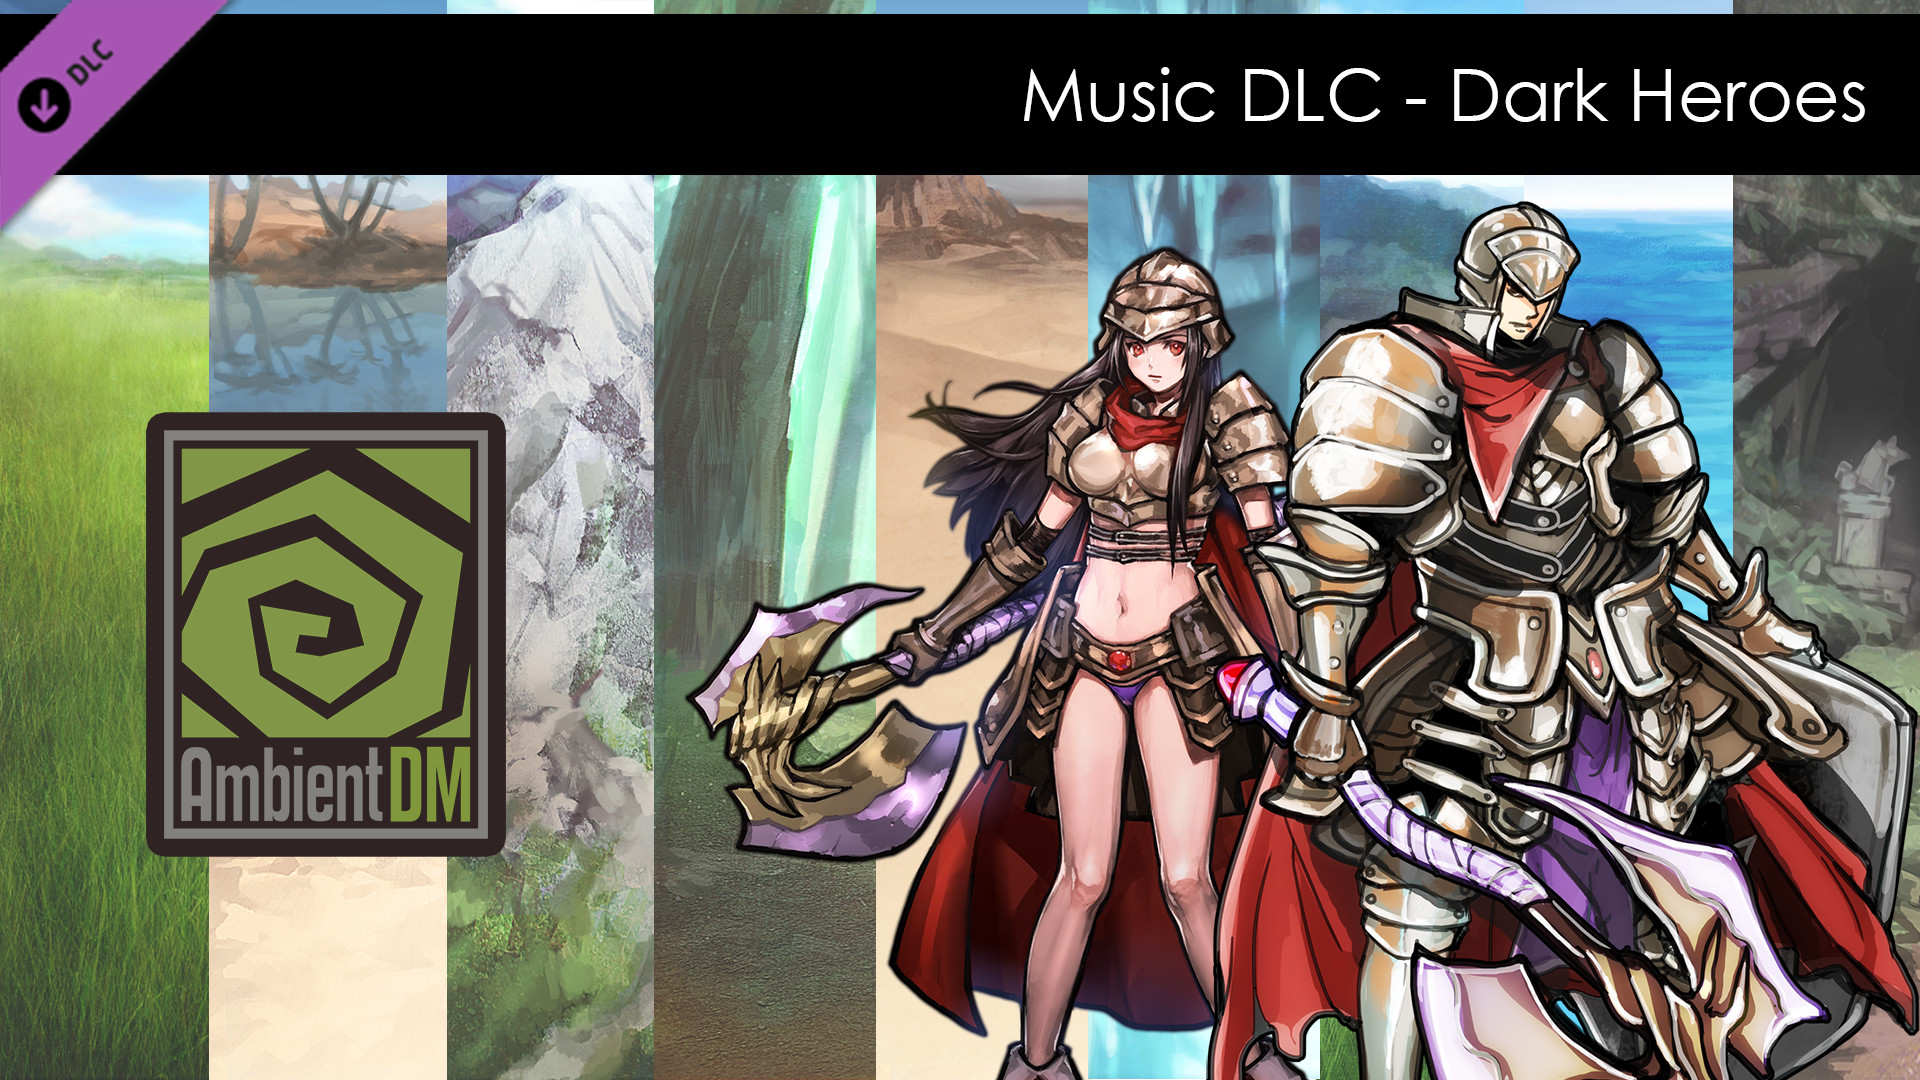 Ambient DM DLC - (Music) Dark Heroes Featured Screenshot #1